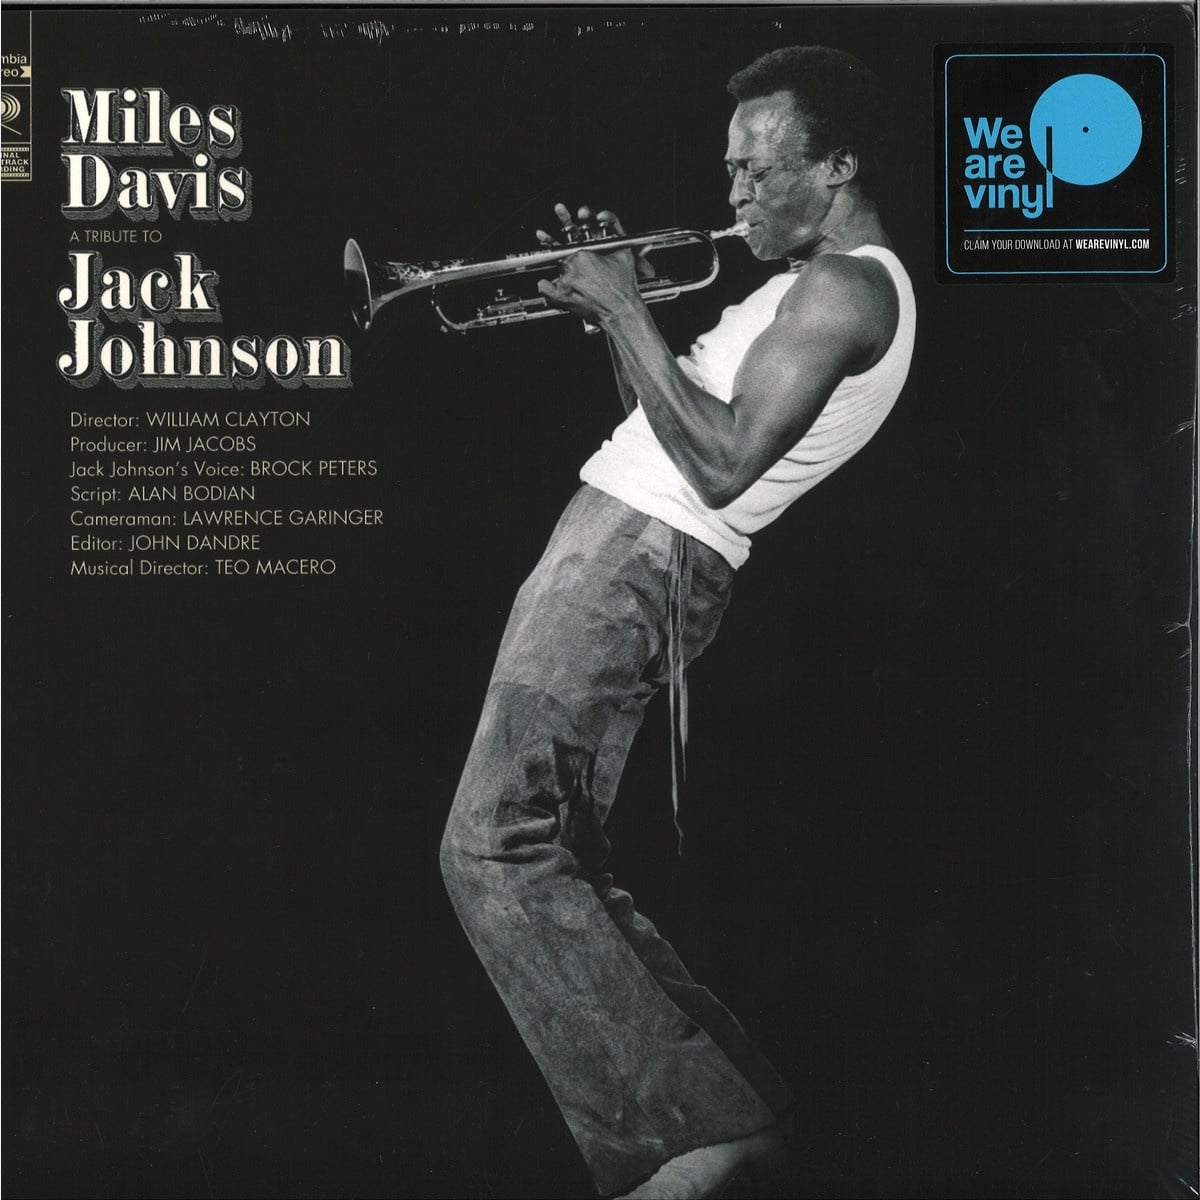 MILES DAVIS - A Tribute To JACK JOHNSON